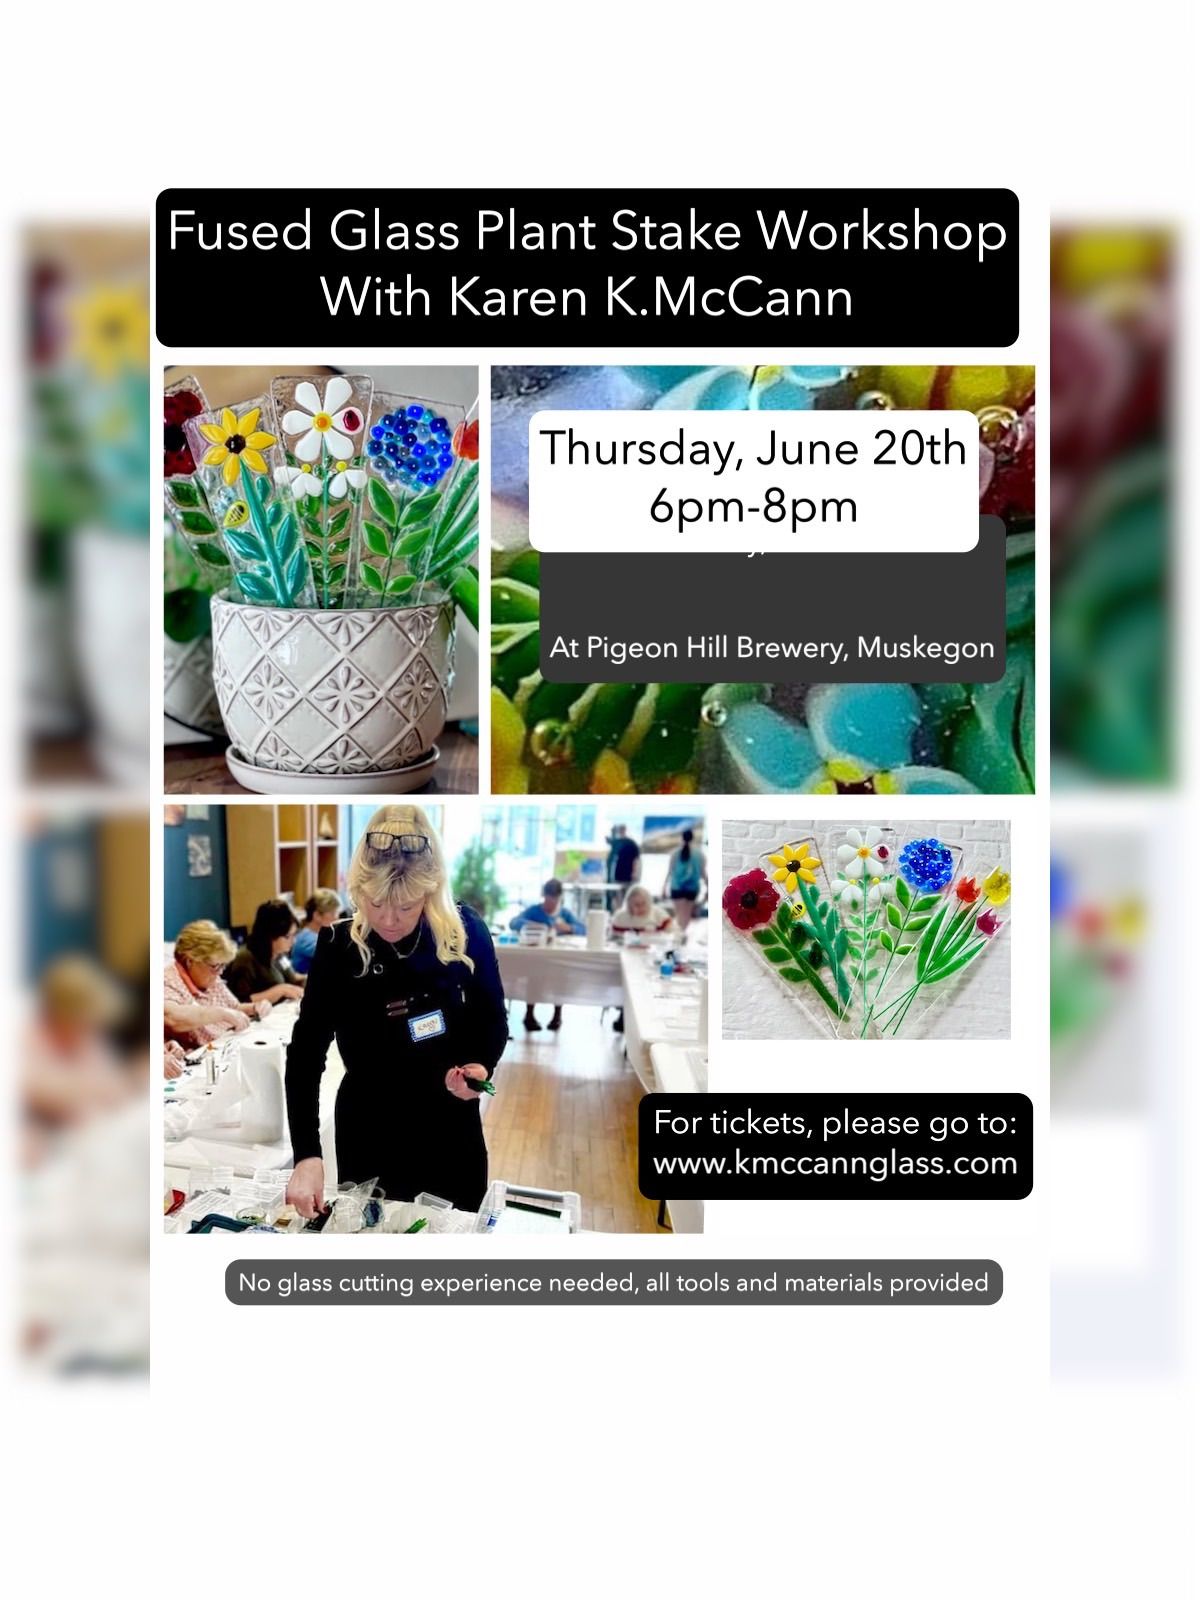 Fused Glass Workshop in Muskegon